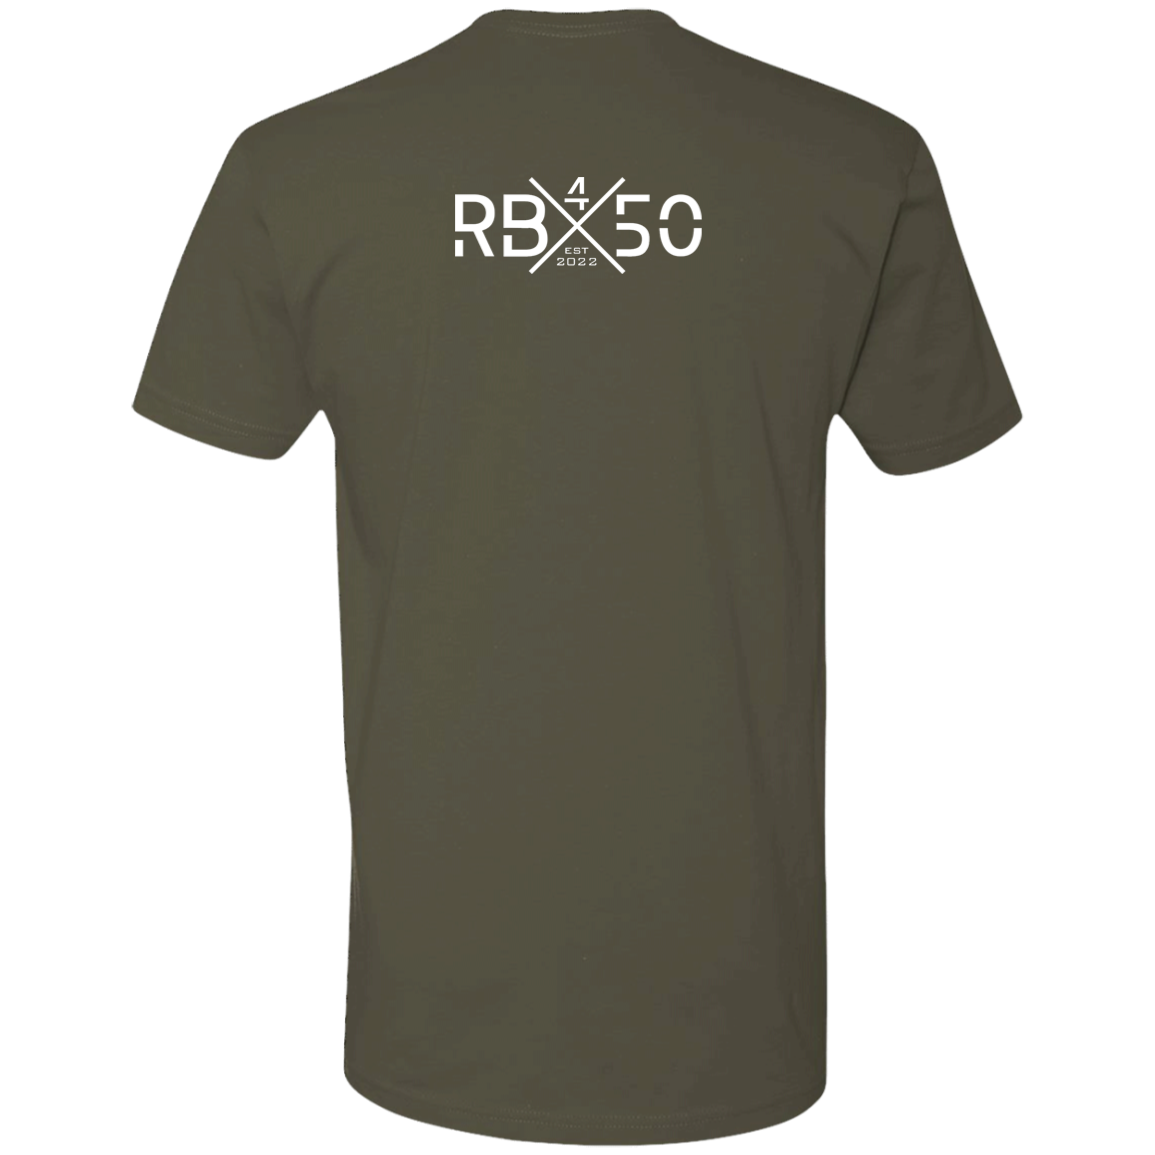 RB450 ONE Premium Short Sleeve Tee